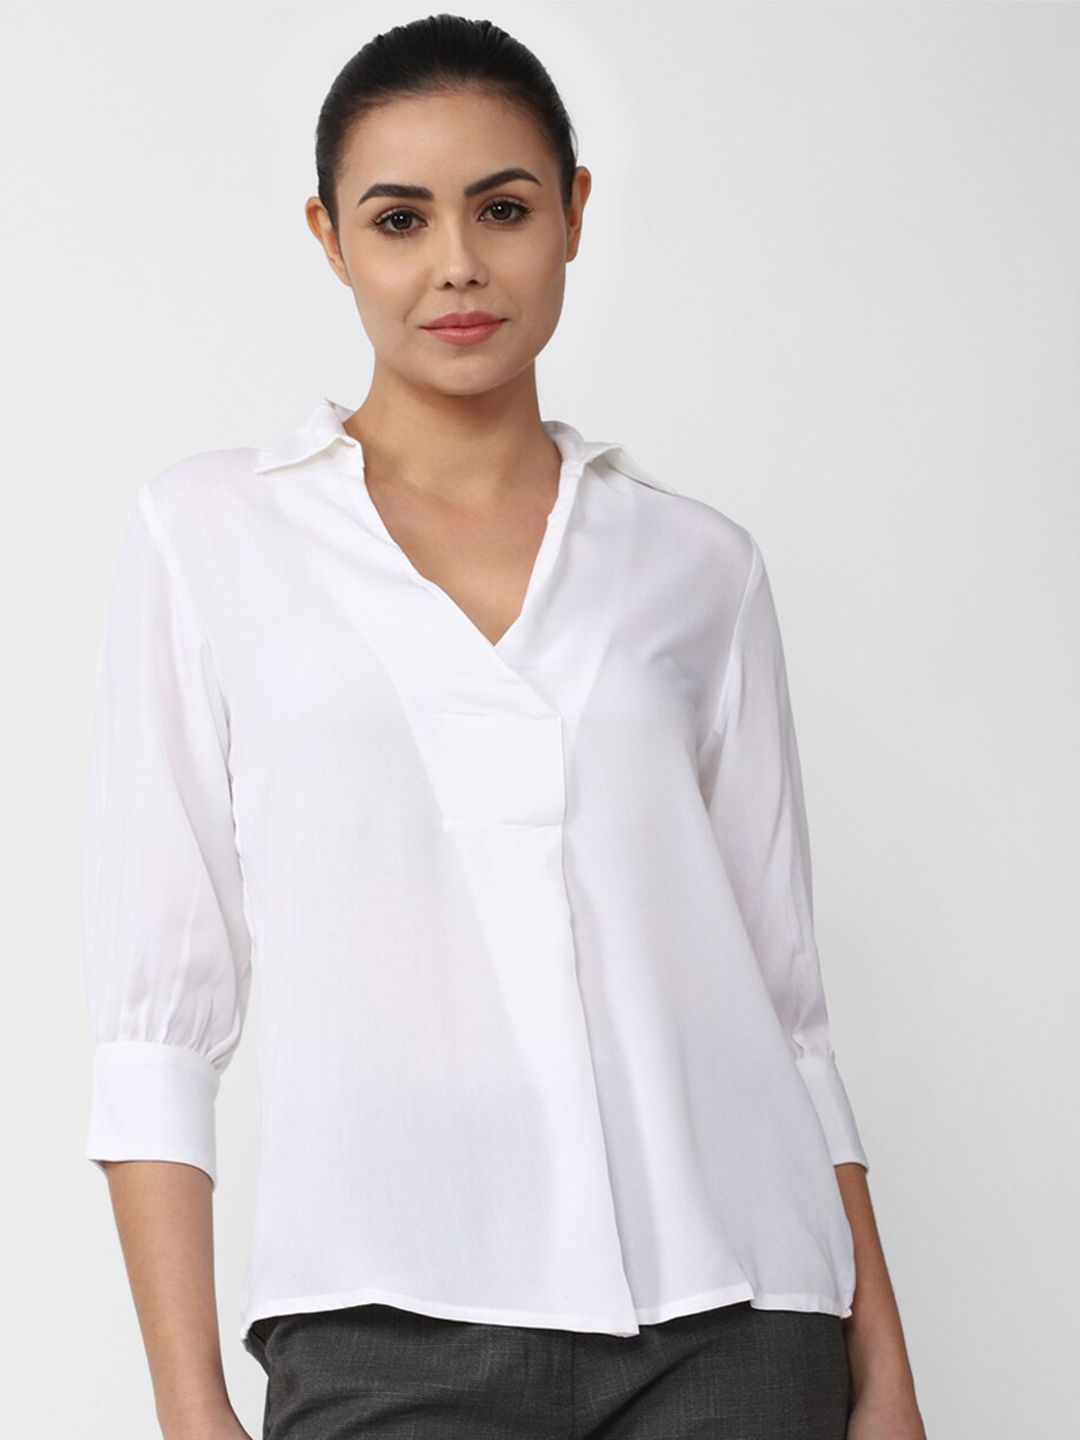 Van Heusen Woman White Shirt Style Top Price in India